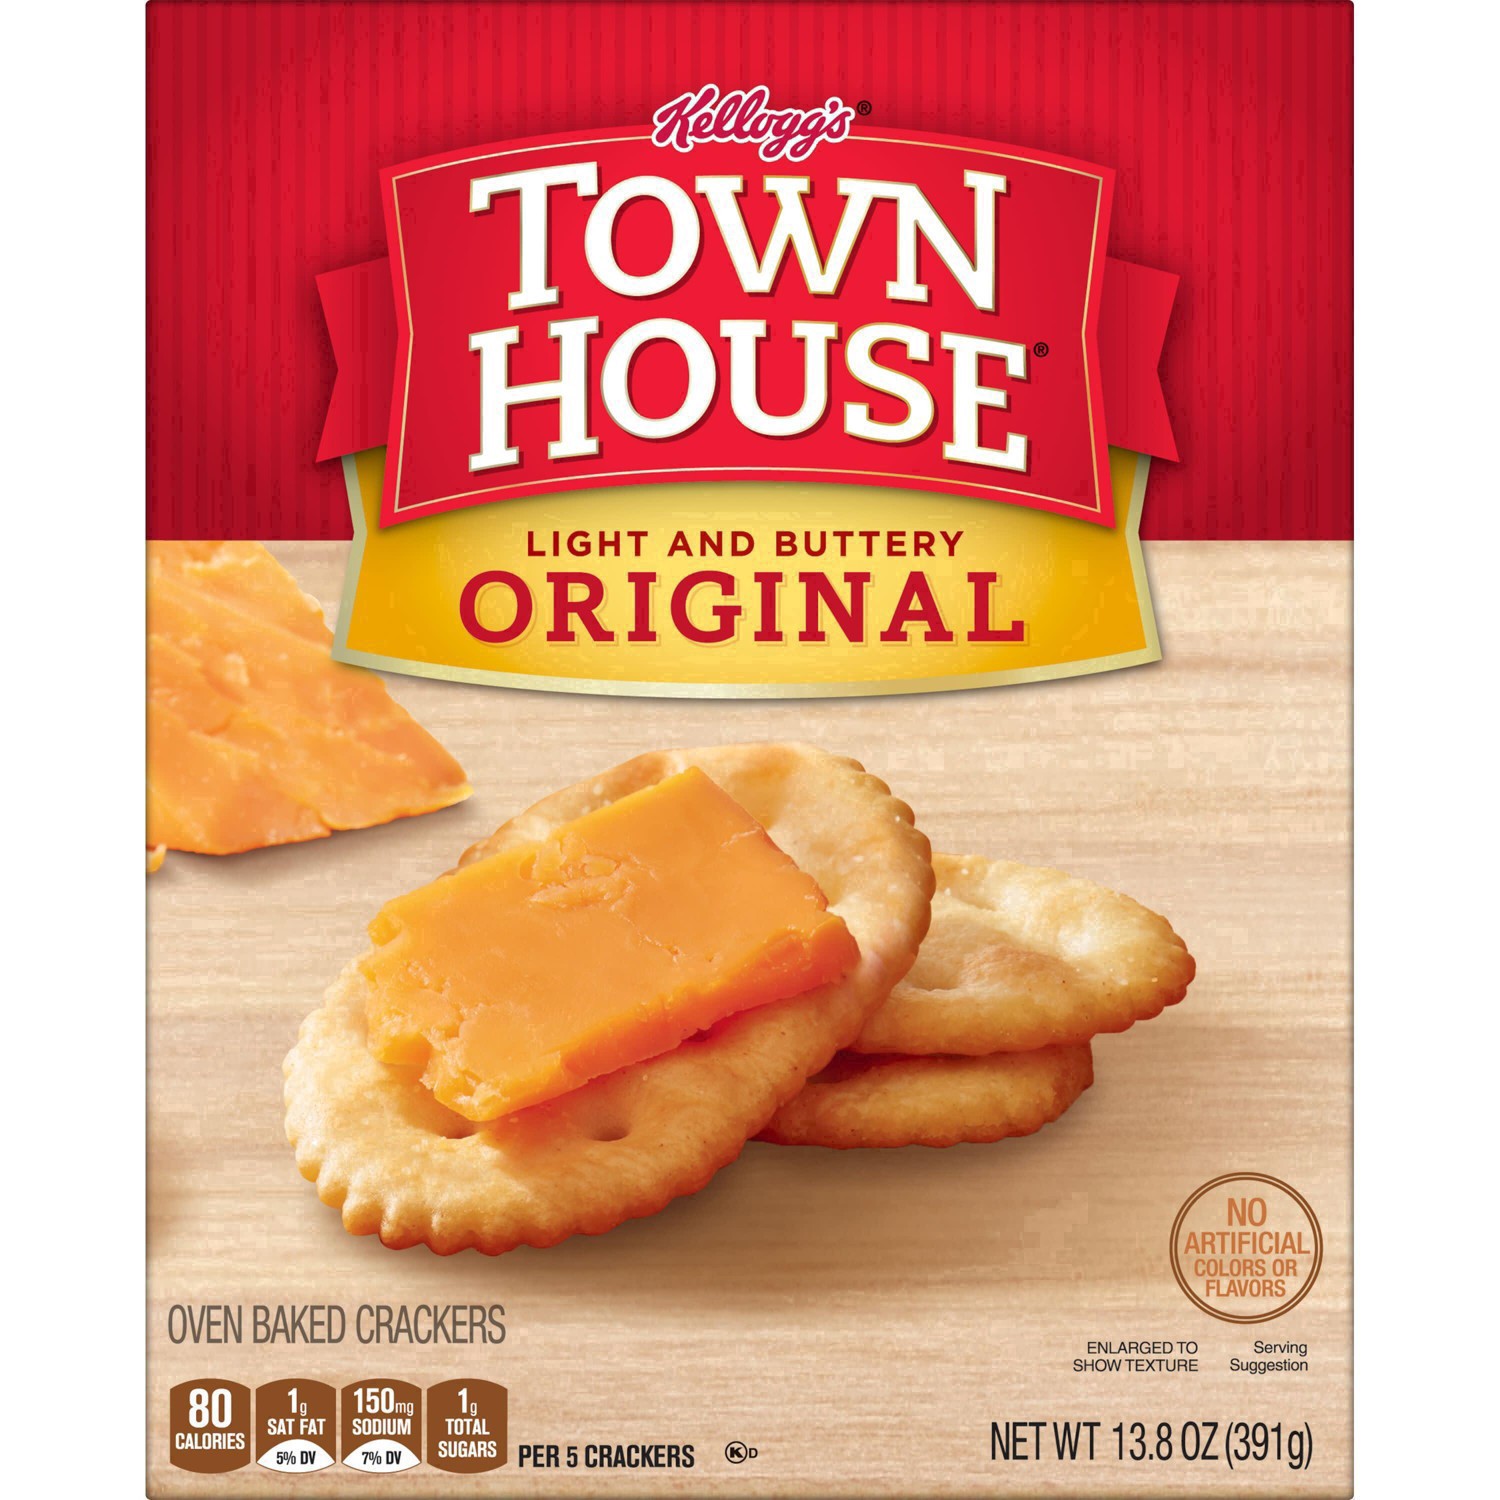 slide 13 of 101, Town House Kellogg's Town House Original Snack Crackers - 13.8oz, 13.8 oz